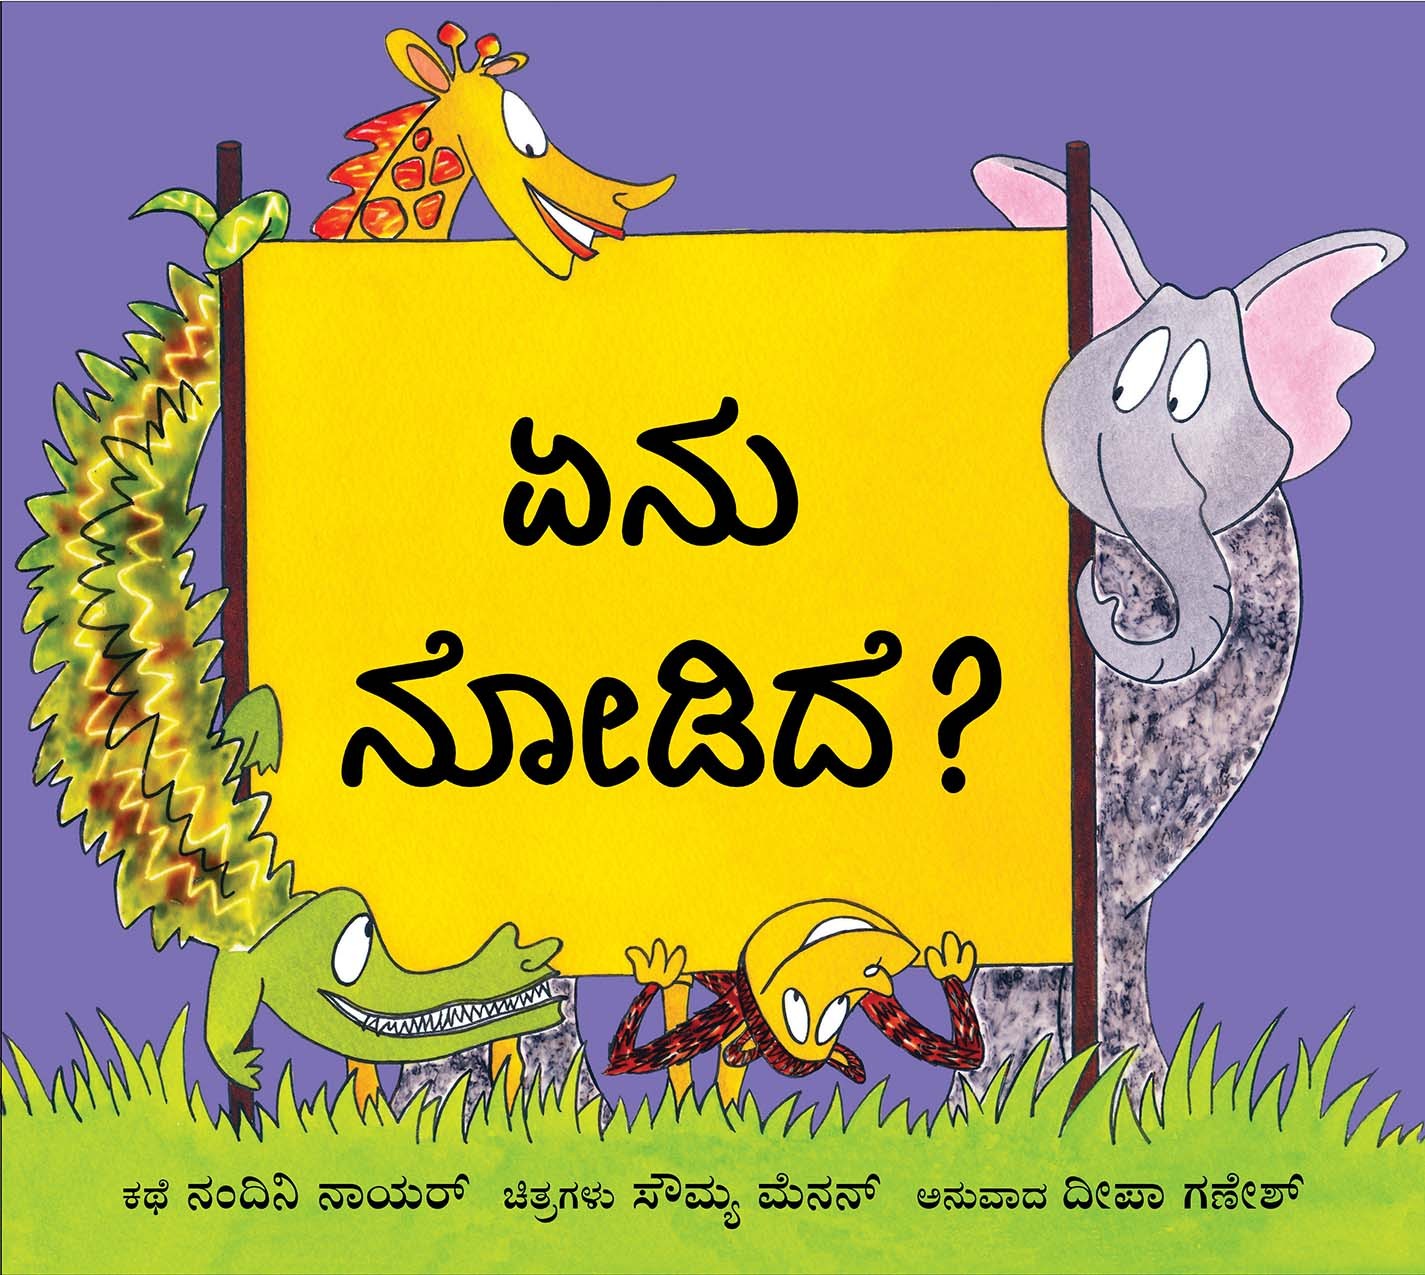 What Did You See?/Enu Nodide? (Kannada)